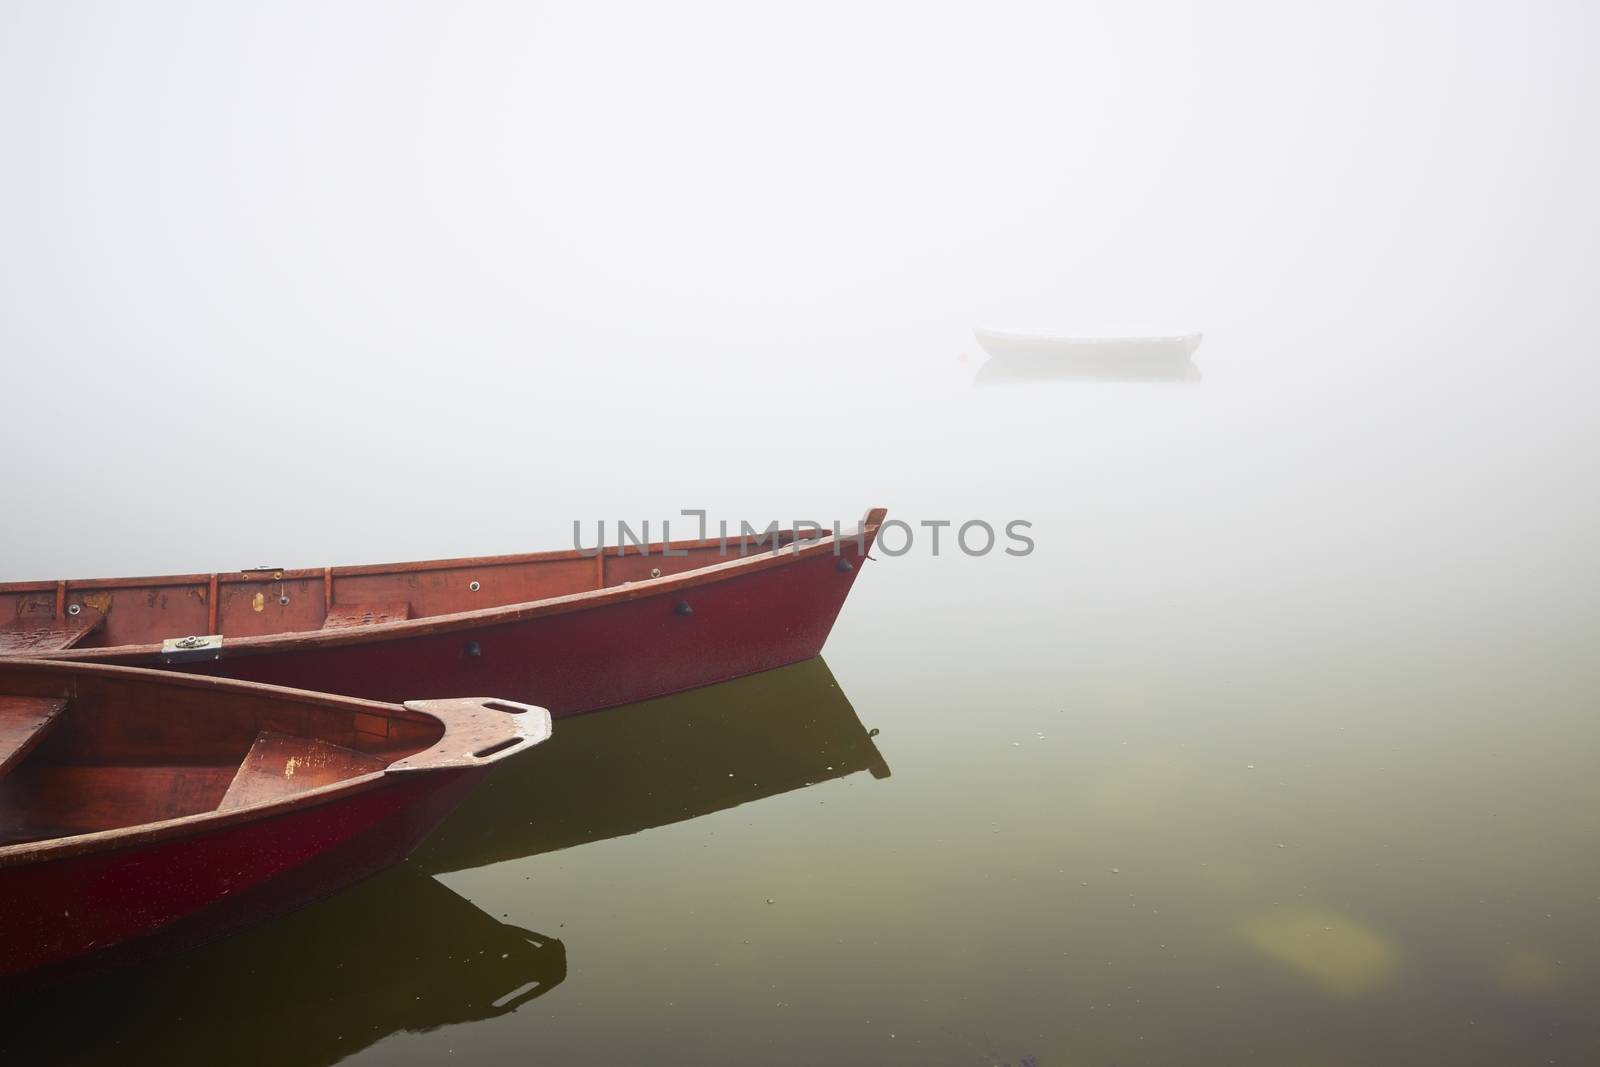 Boats on the lake at morning fog.